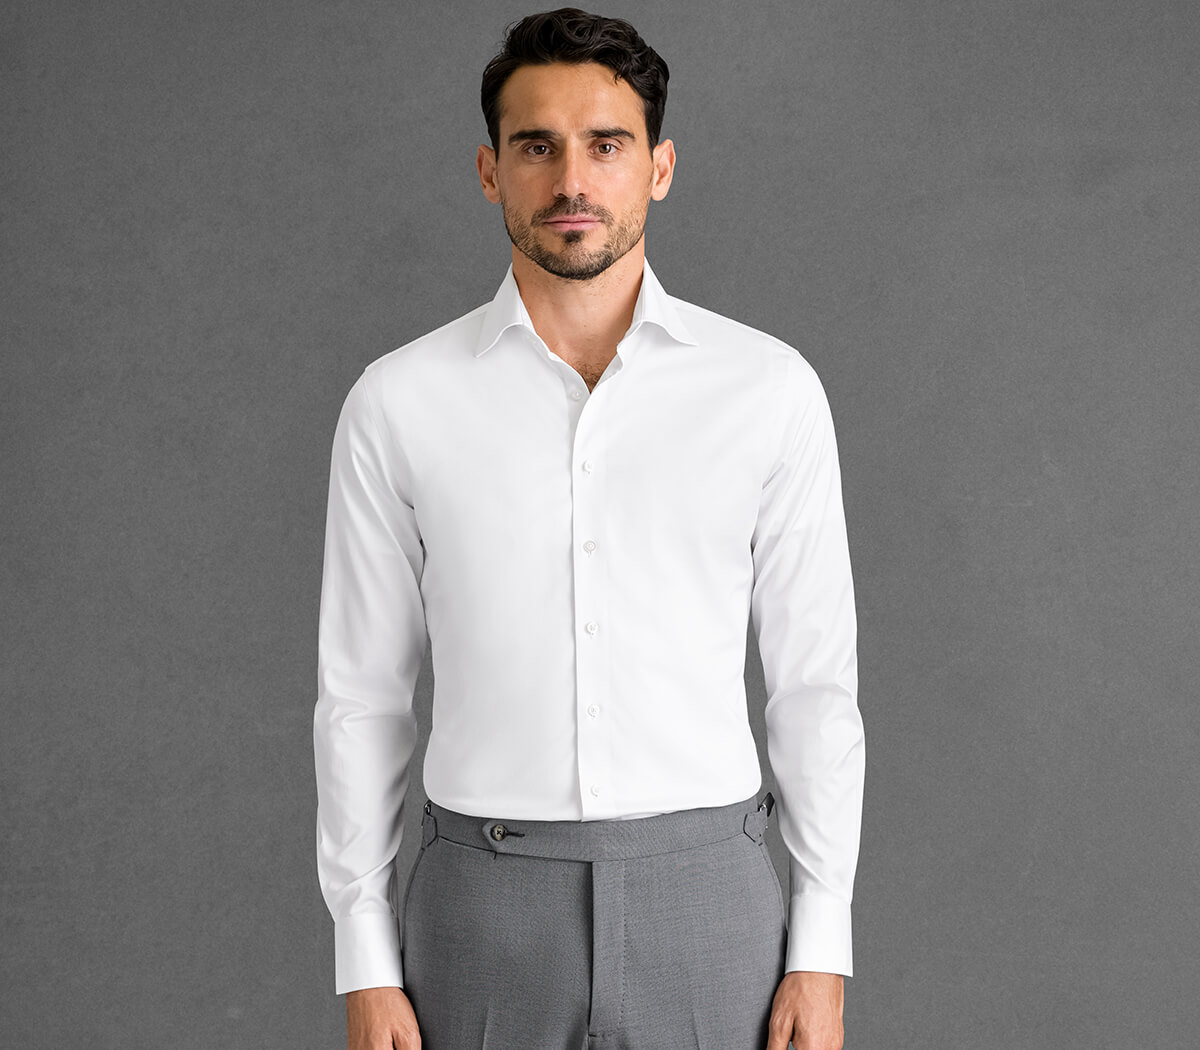 Proper Cloth Shirt Reviews For Tall Men